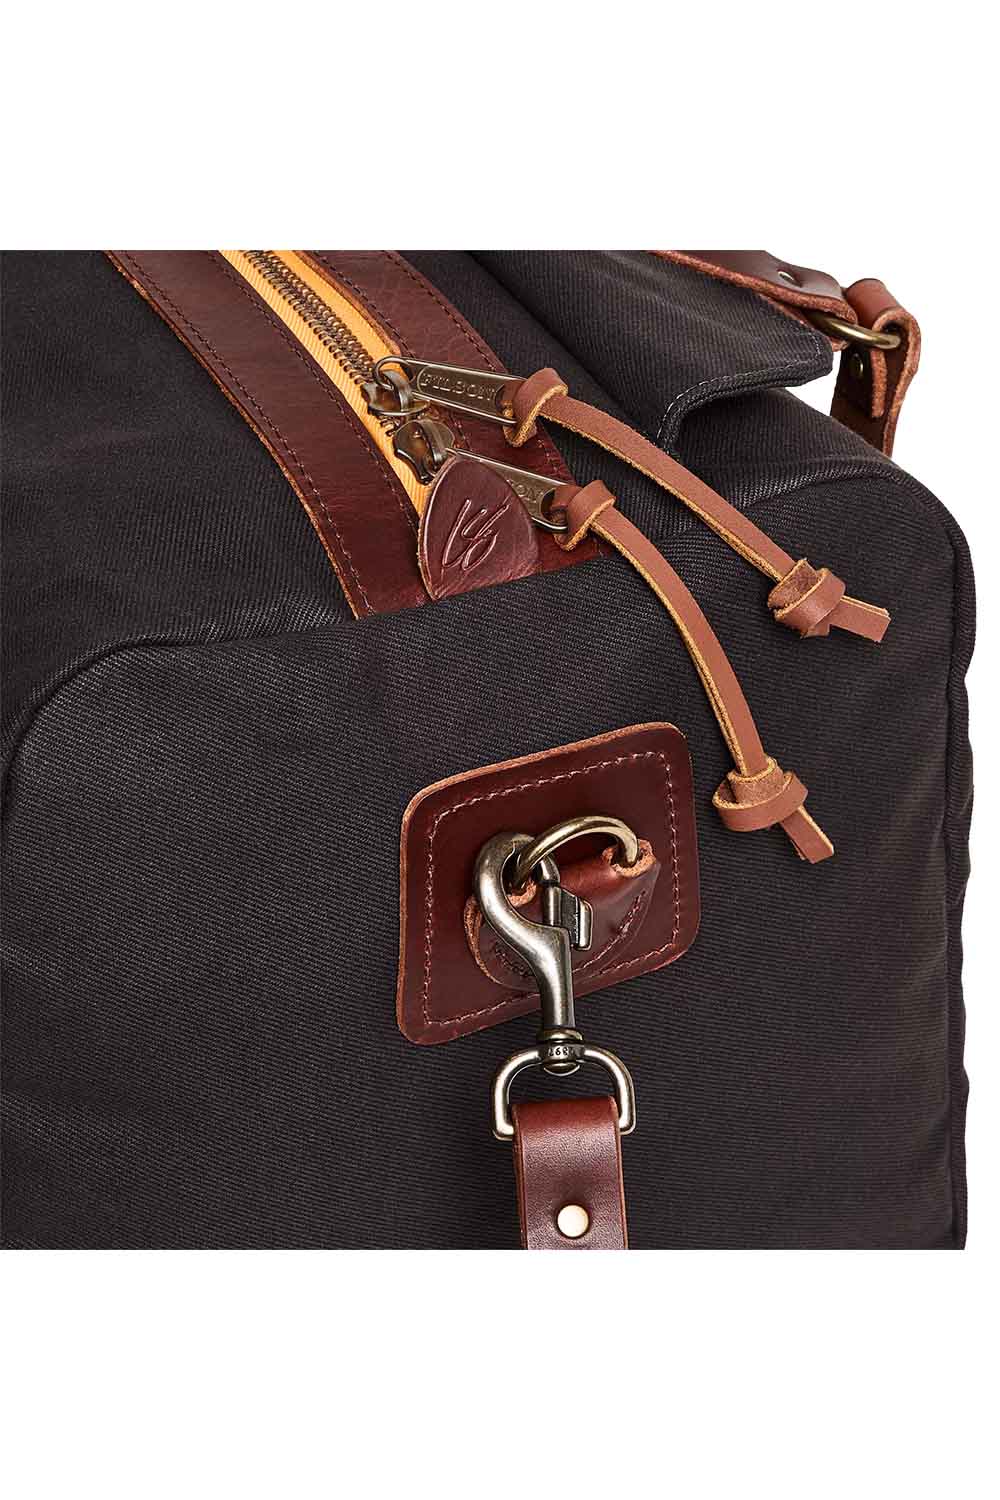 Filson - Traveller Medium Duffle Bag - Cinder - Detail